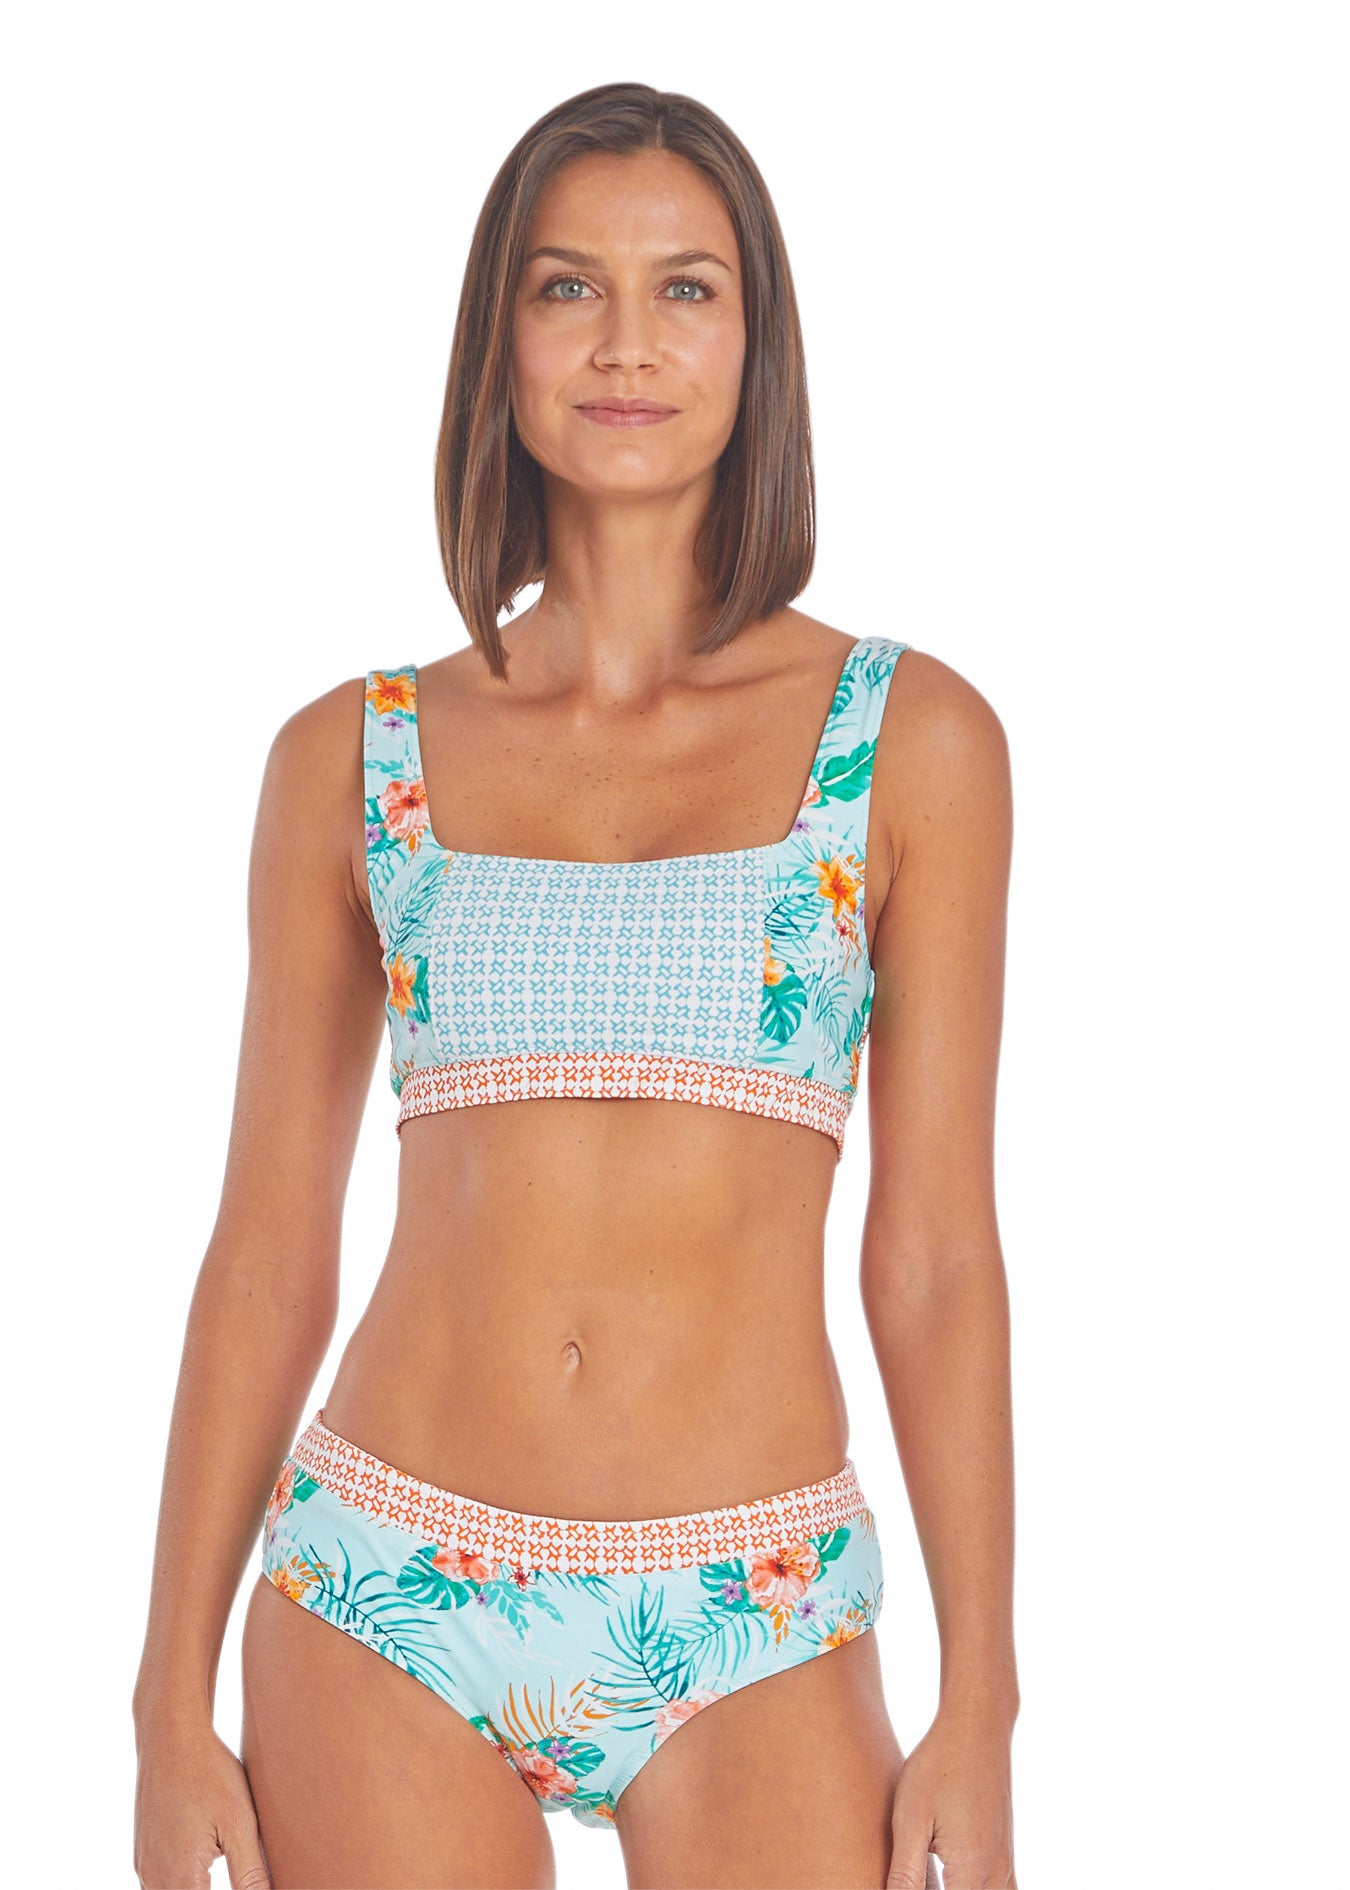 Woman wearing Cabana Life Cayman Reversible Bikini Bottom and Reversible Bikini Top.